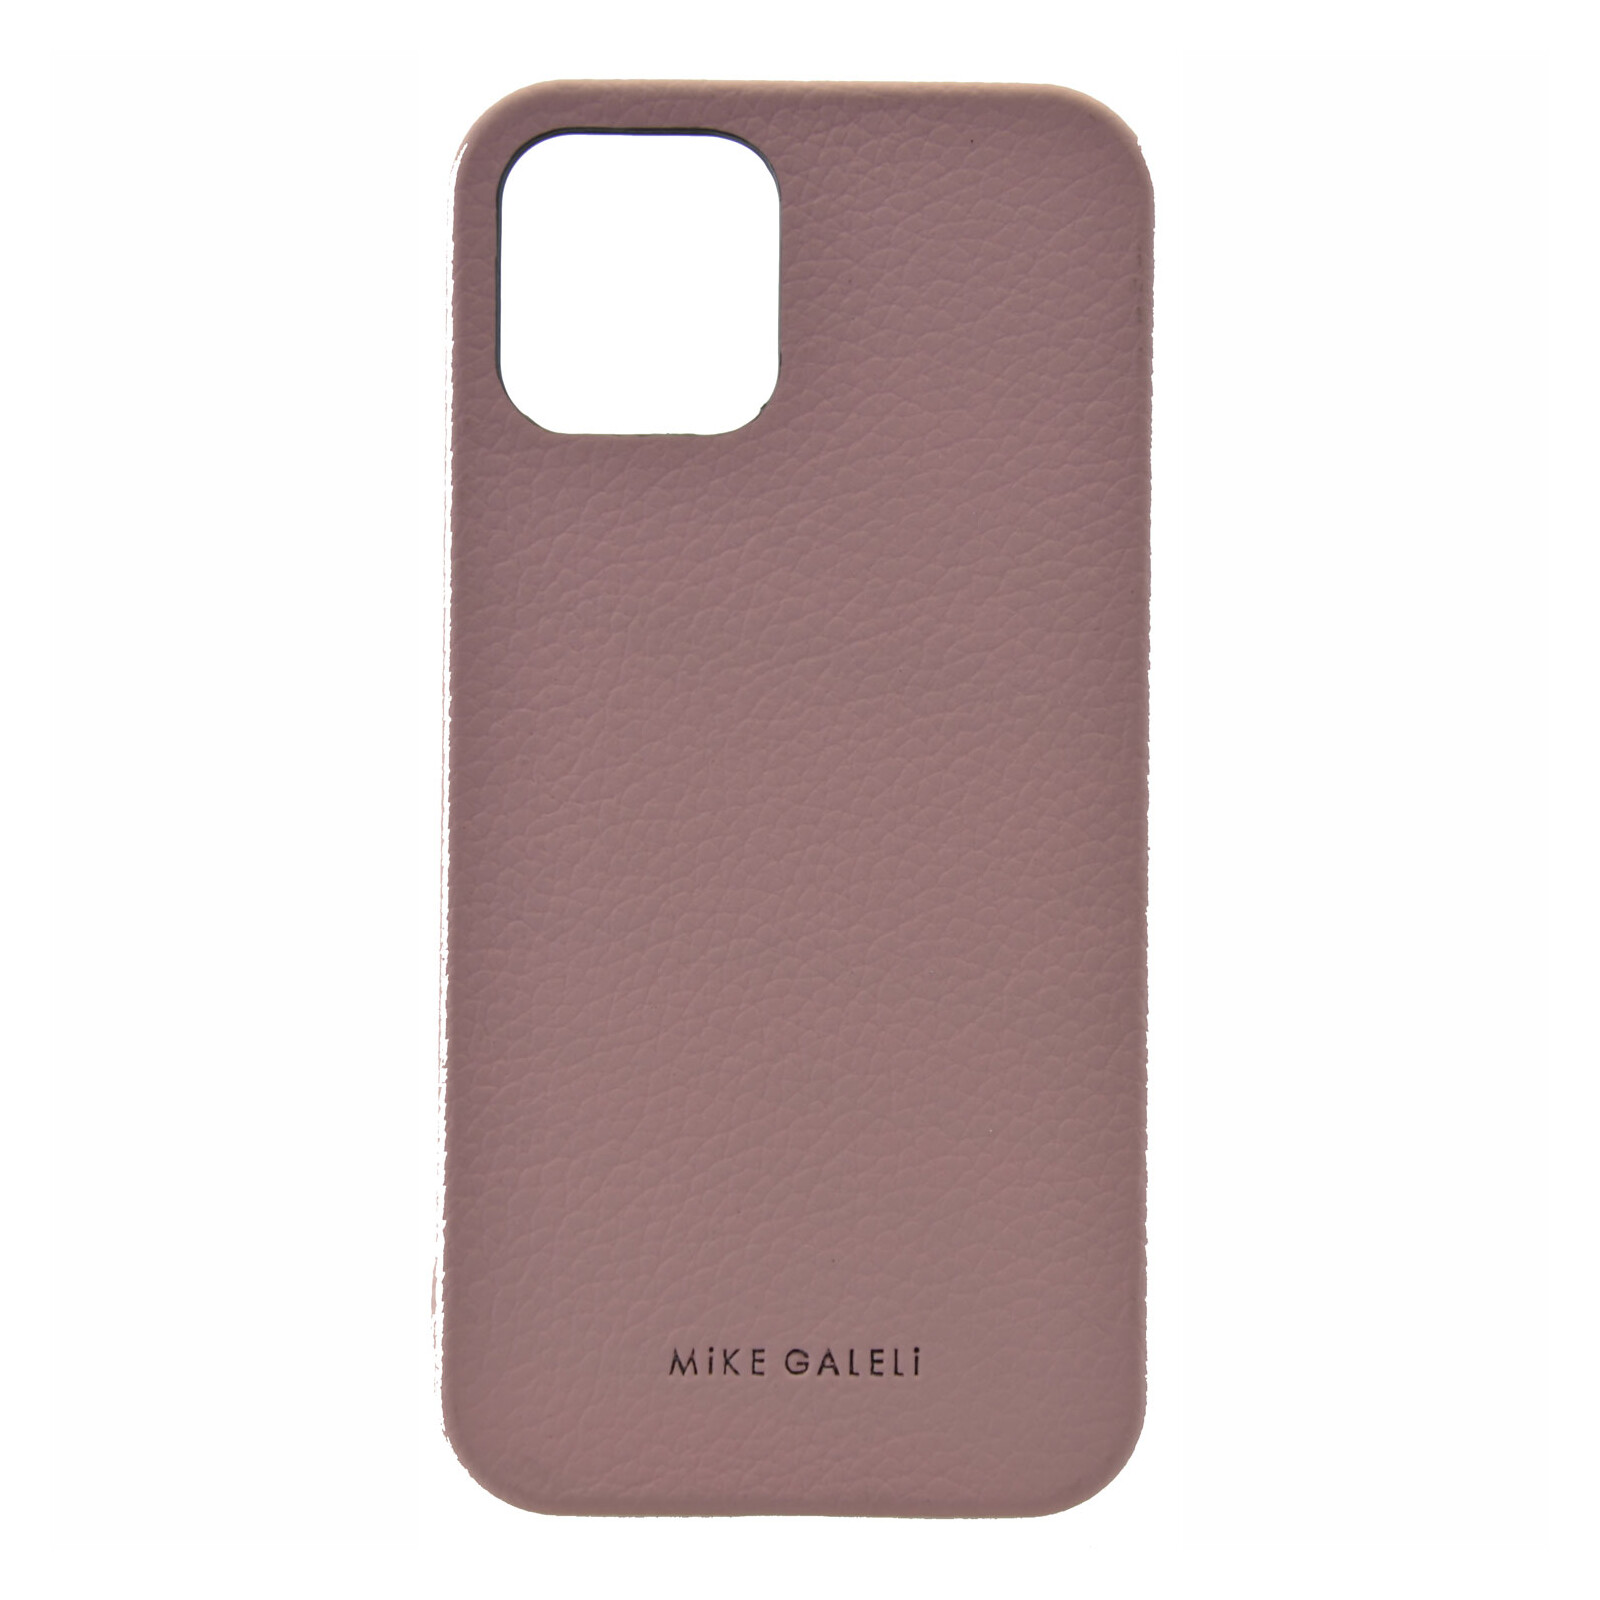 Galeli Backcover FINN Apple iPhone 12  Max/ Pro rose tan